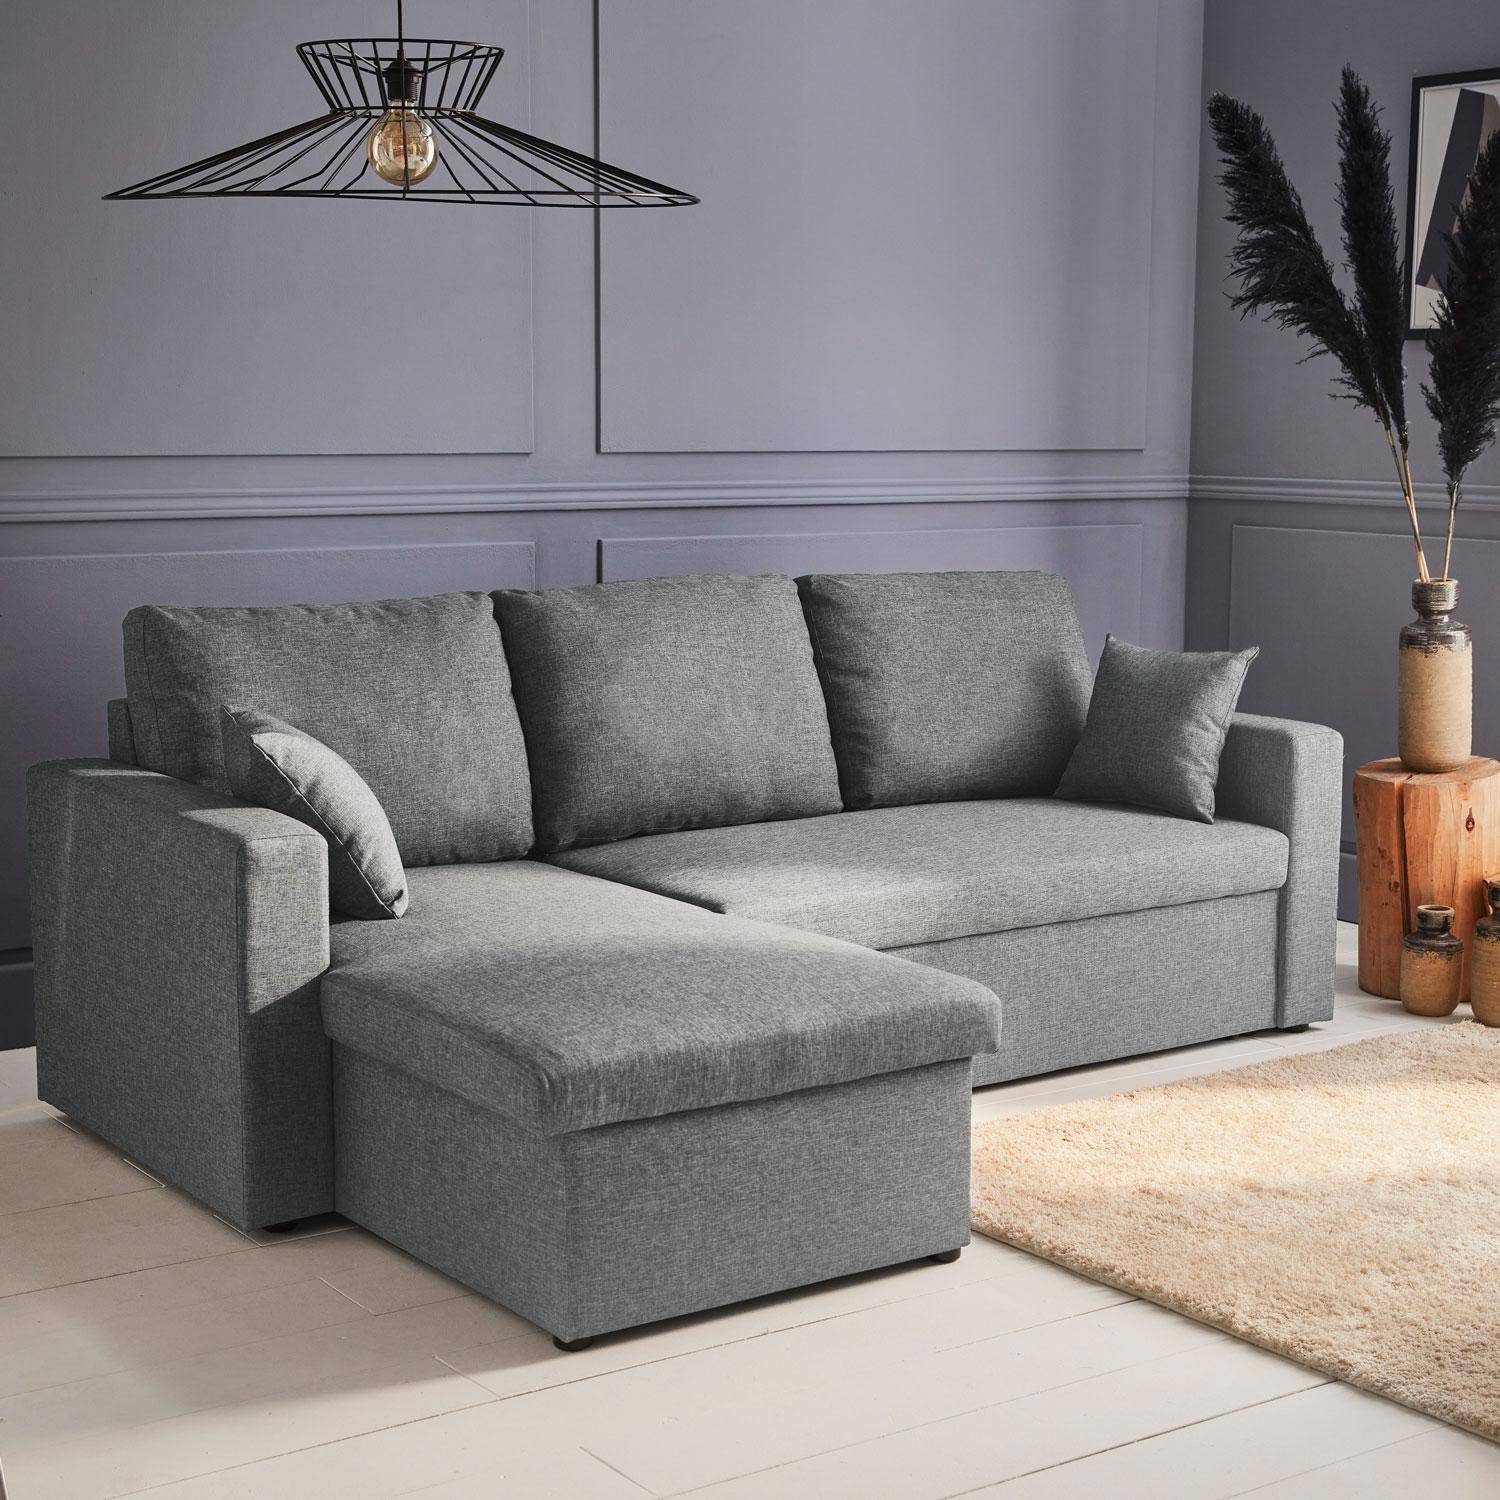 3-seater reversible light grey corner sofa bed with storage box, L219xD81xH68cm, IDA Photo1